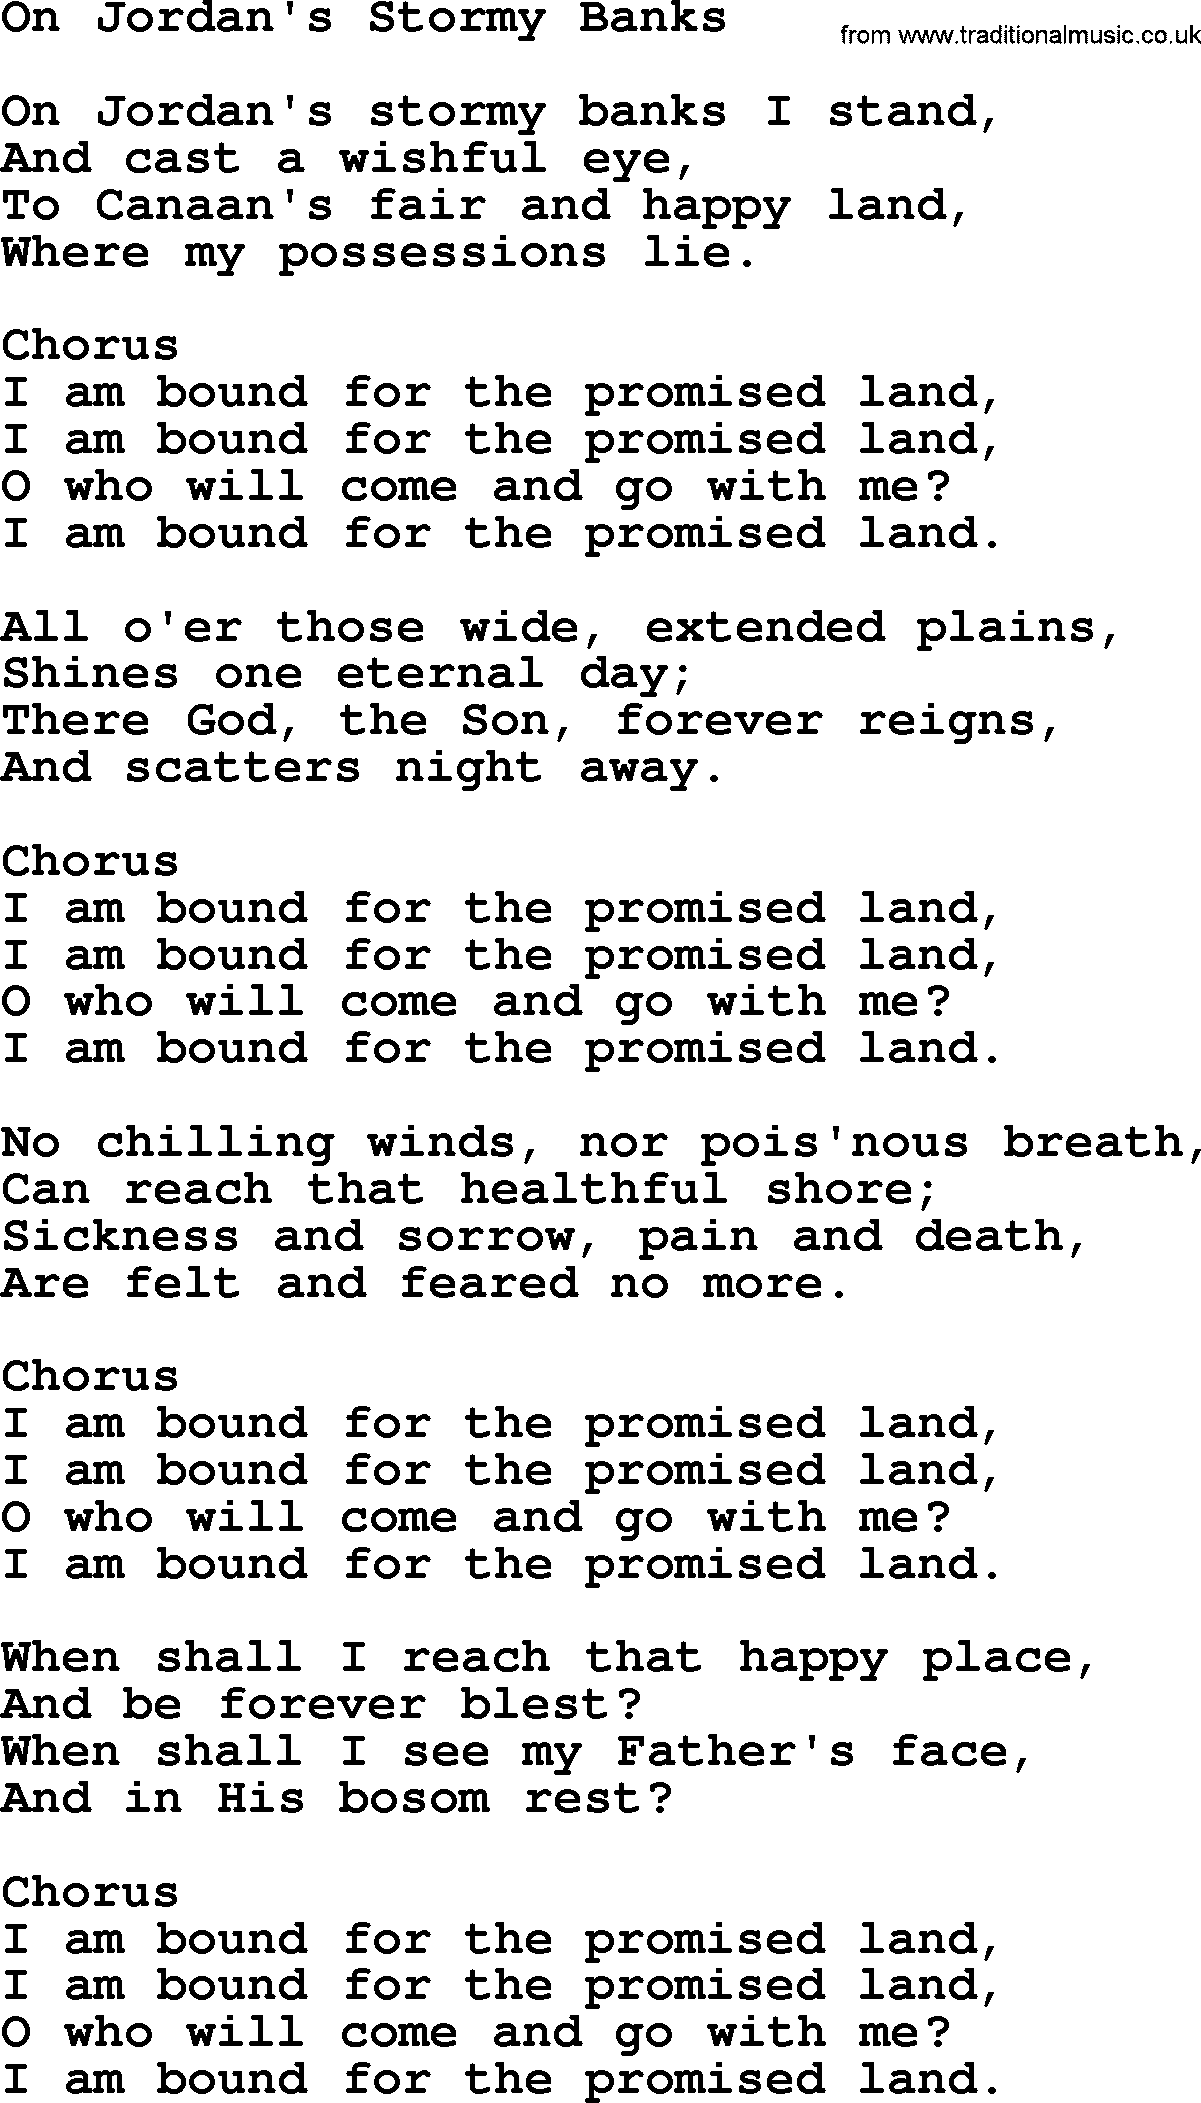 Baptist Hymnal Hymn: On Jordan's Stormy Banks, lyrics with pdf